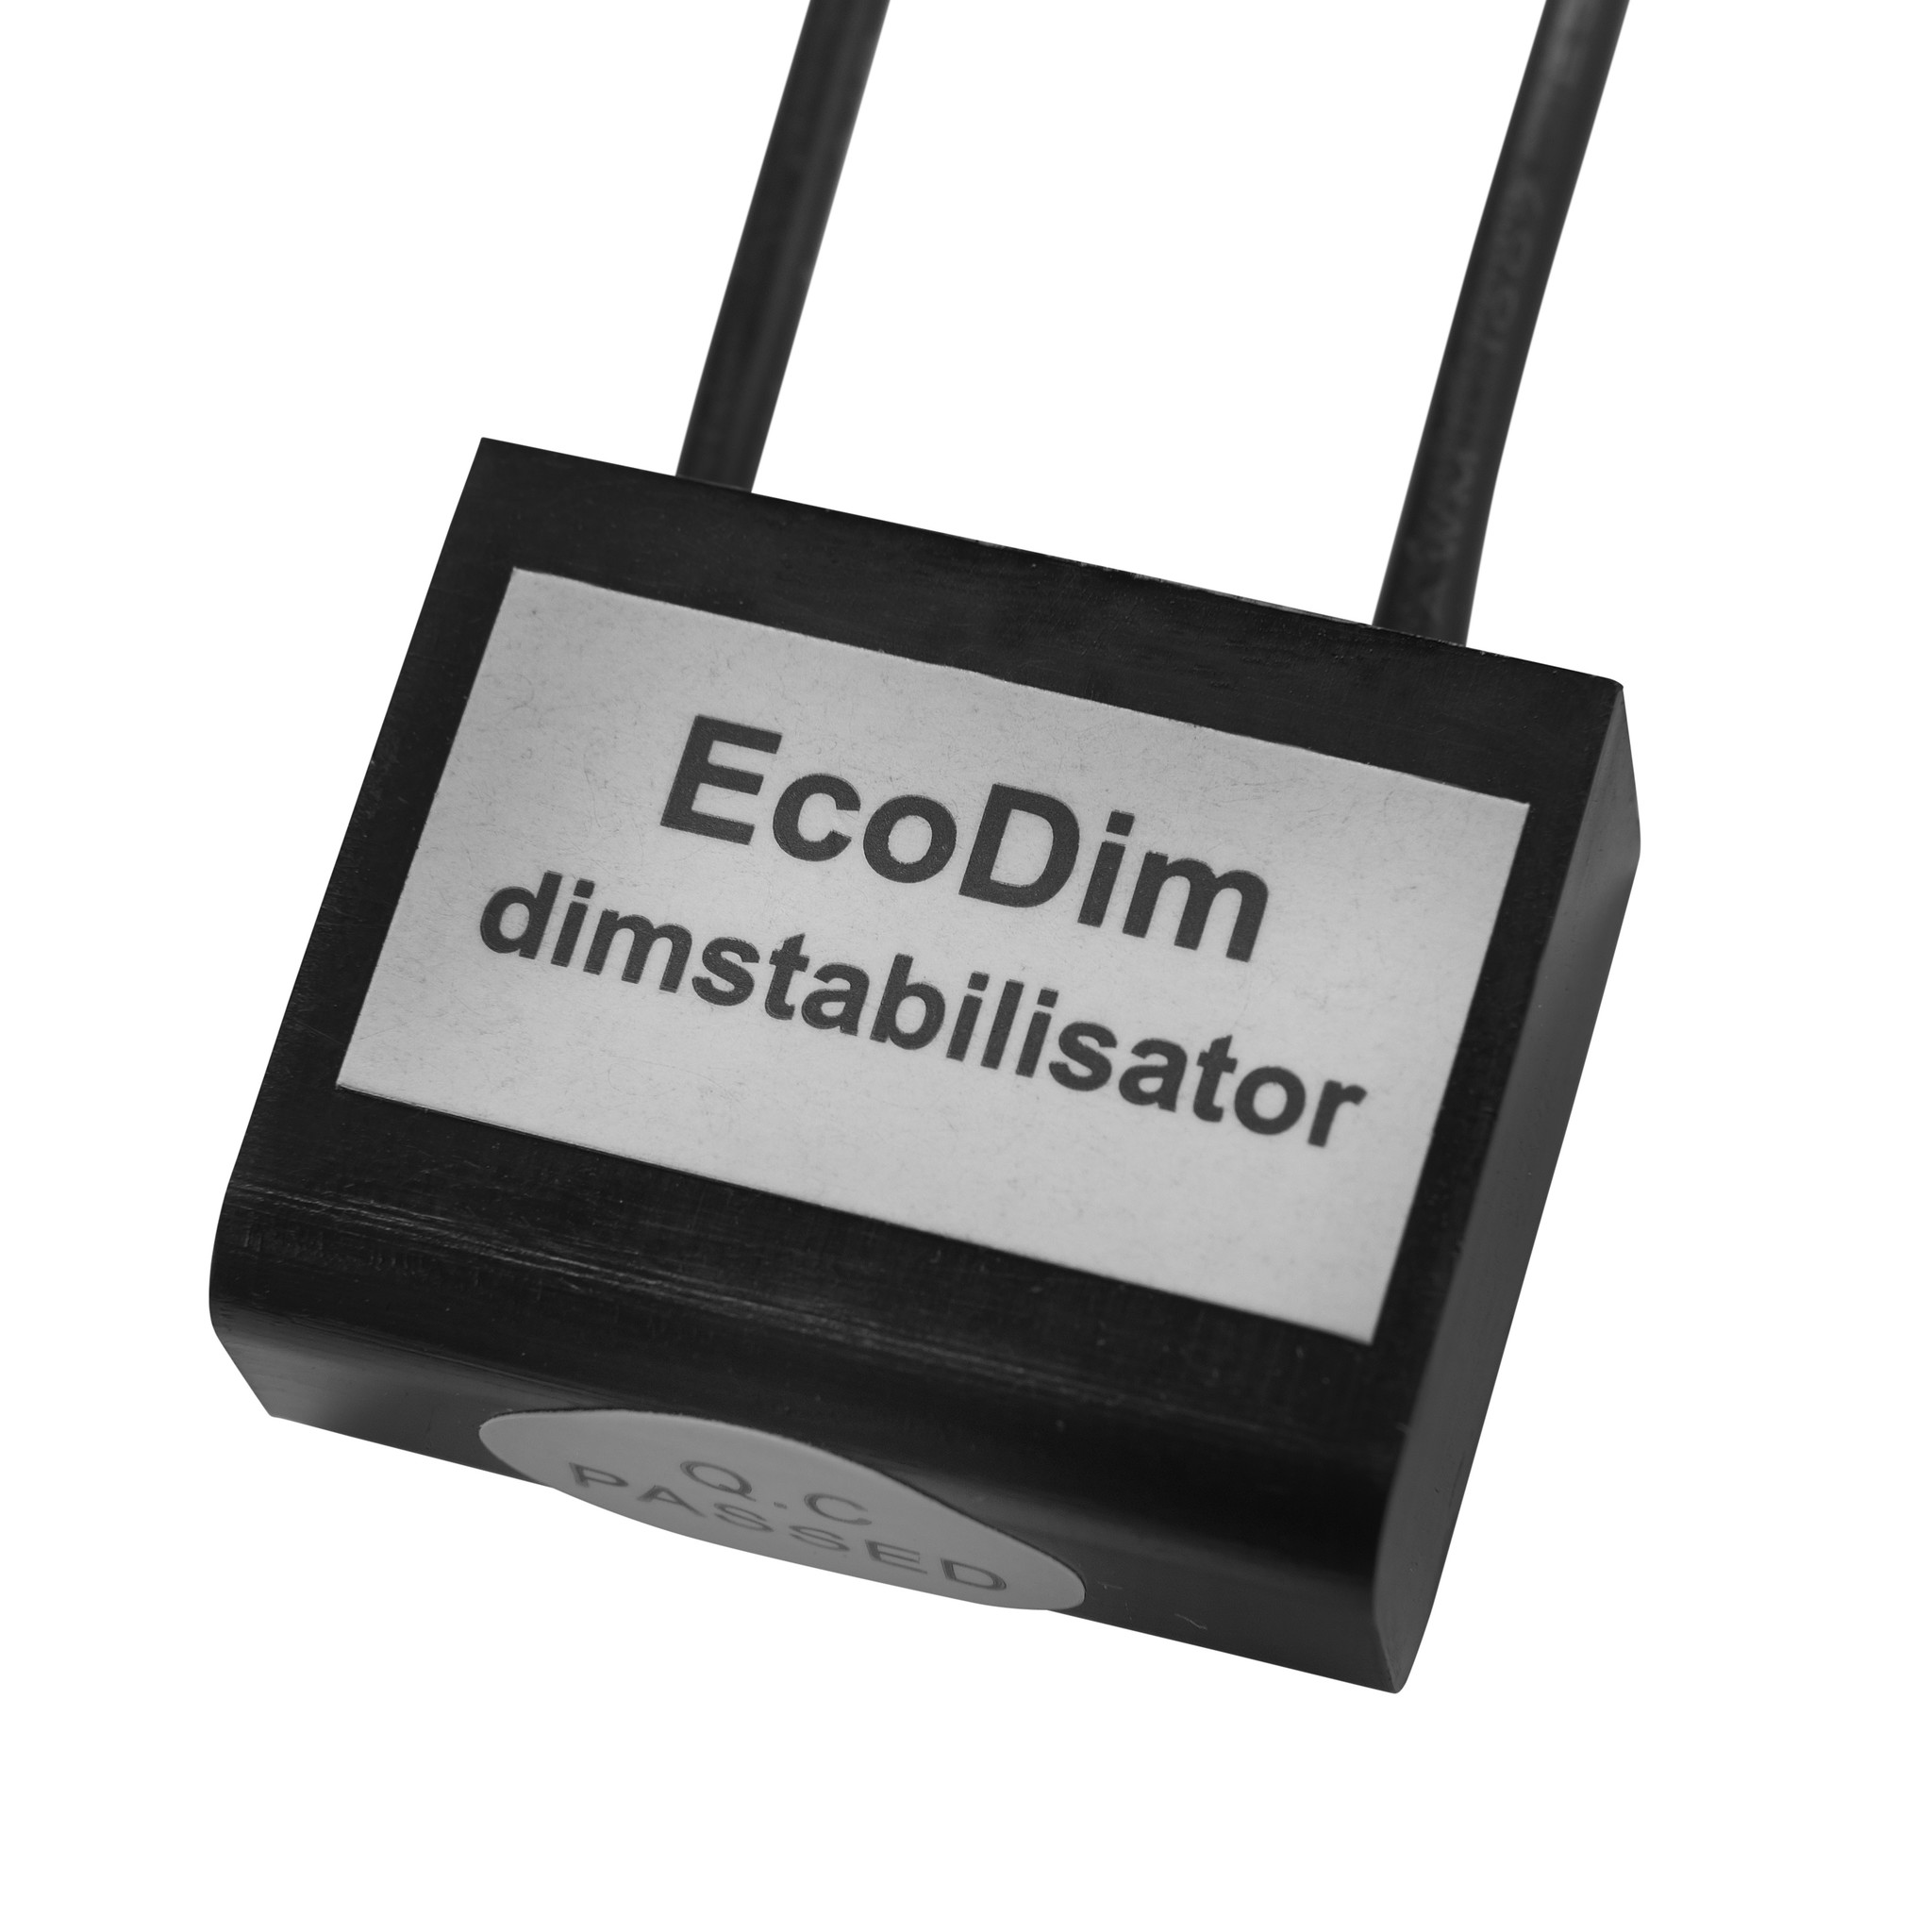 EcoDim Led dimstabilisator